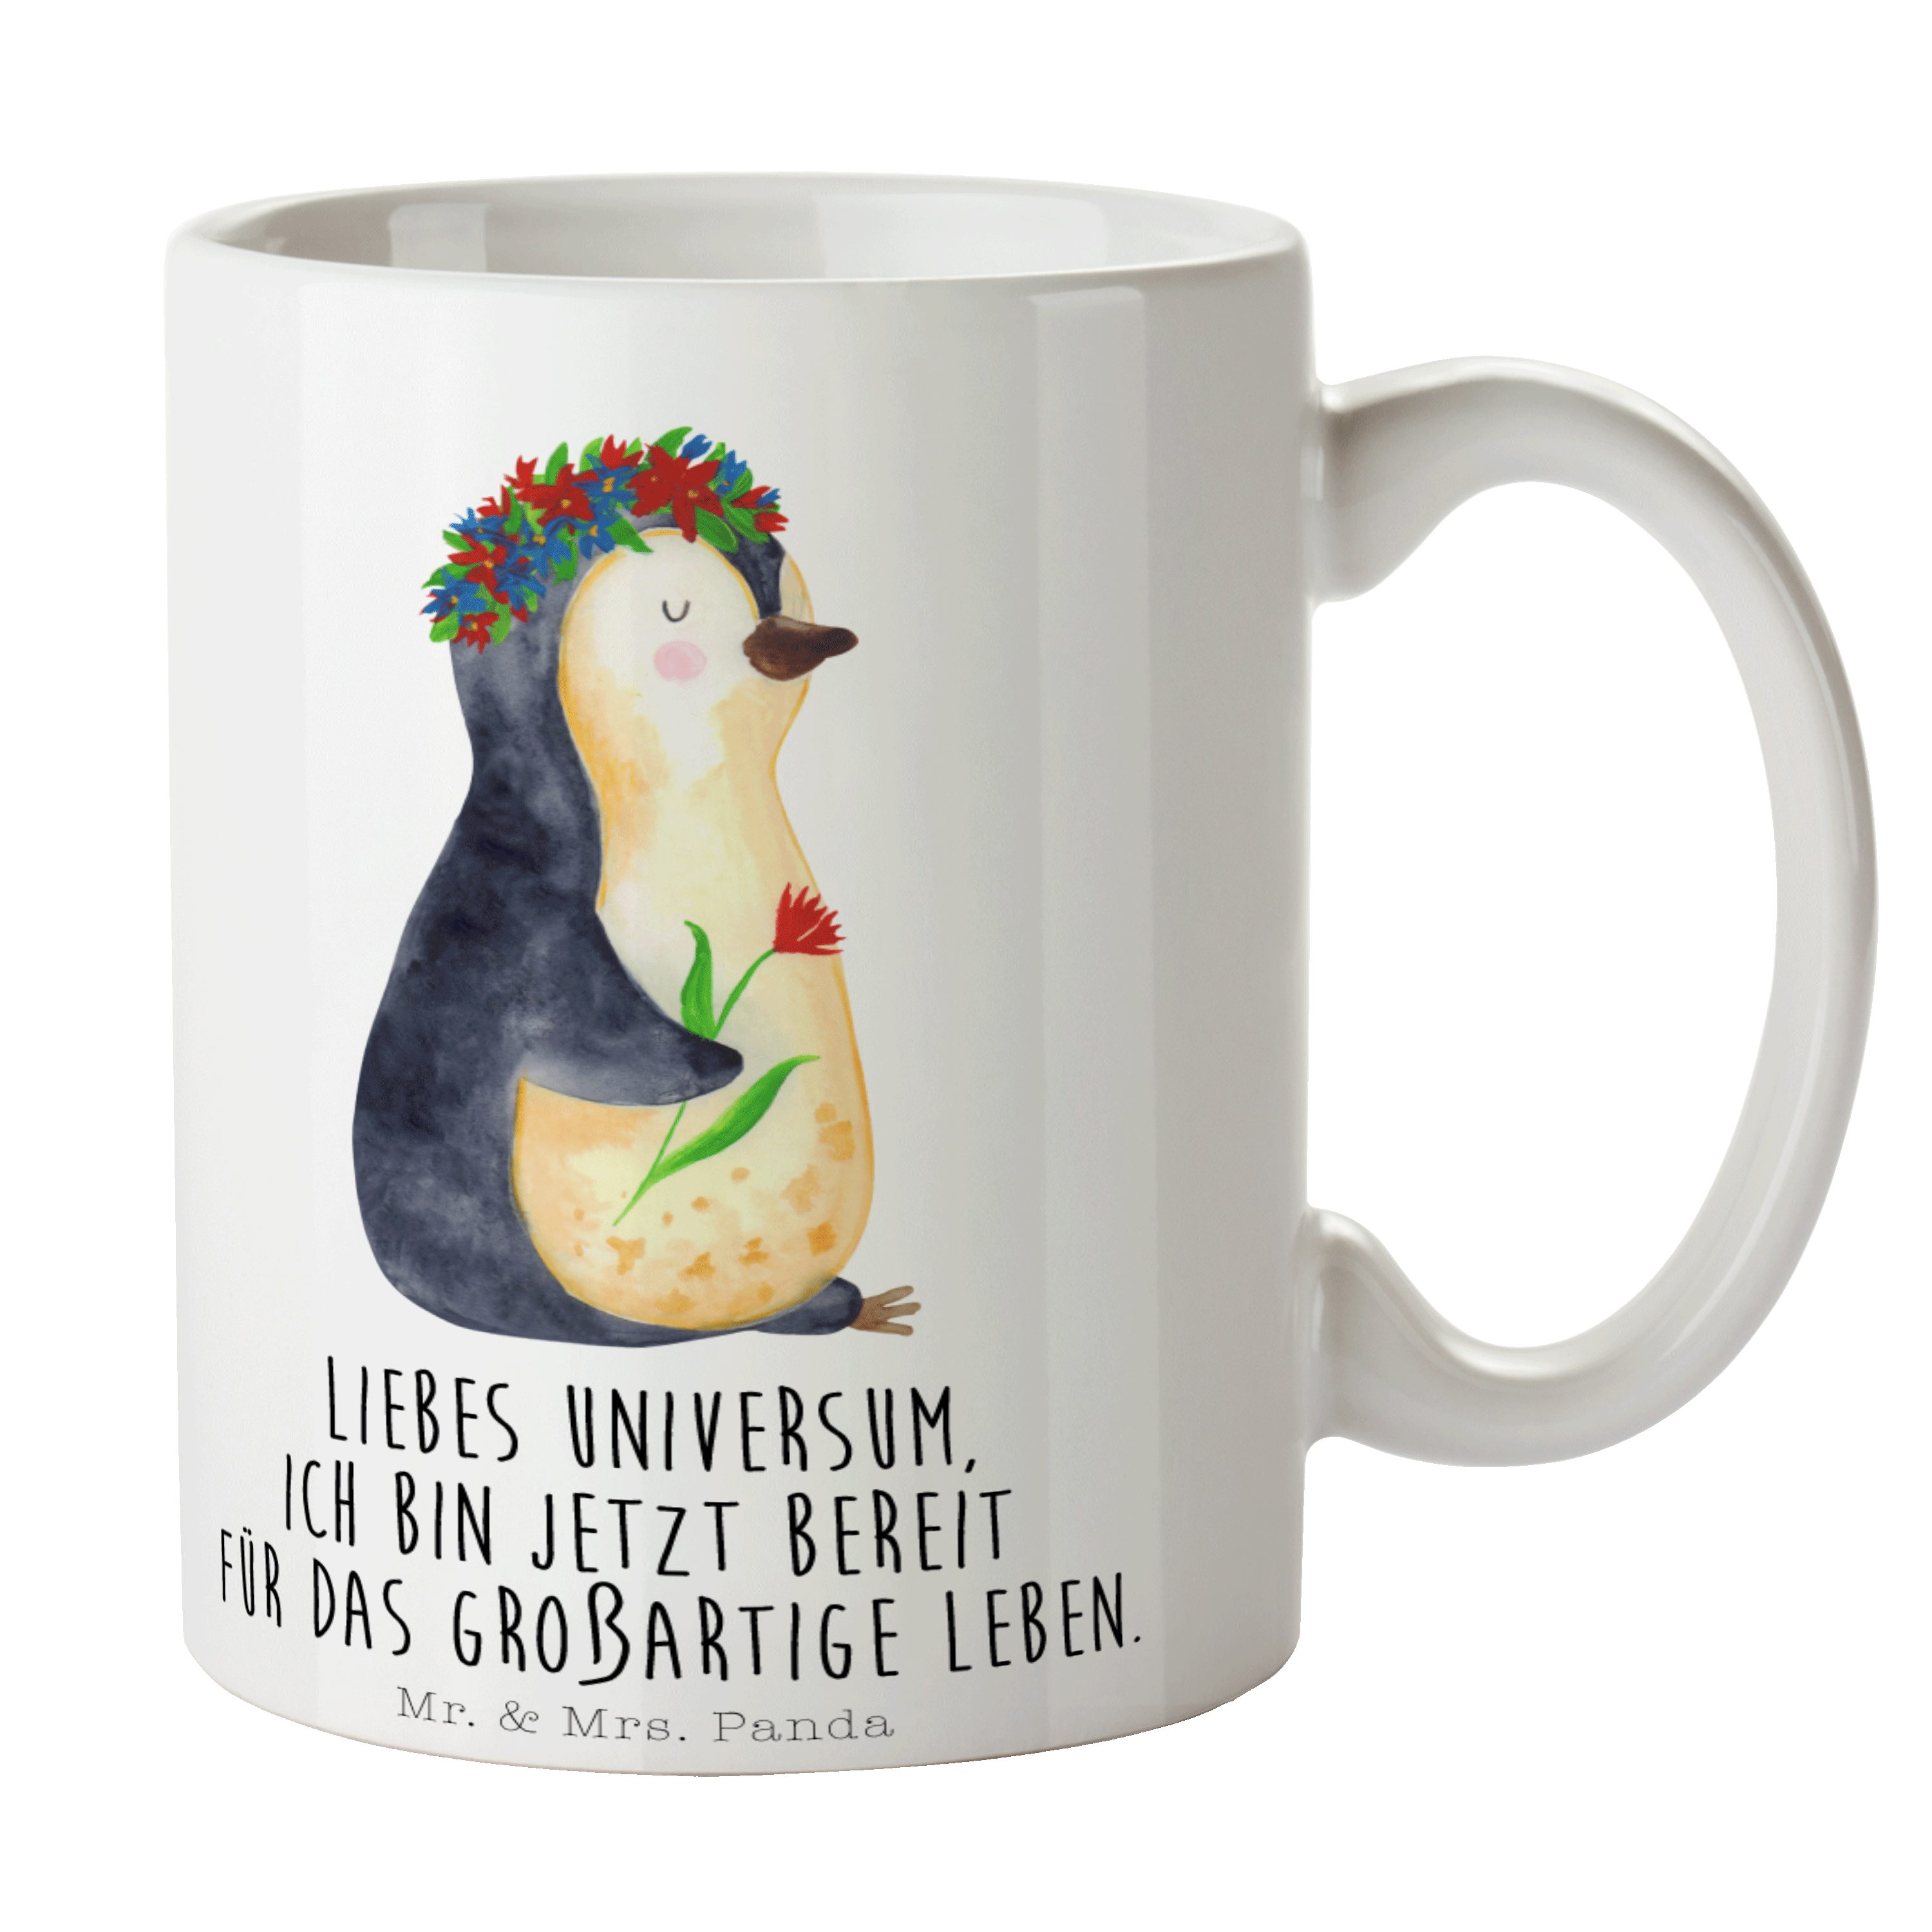 Mr. & Mrs. Panda Tasse Pinguin Blumenkranz - Weiß - Geschenk, Lebensziele, Tasse, Kaffeetass, Keramik